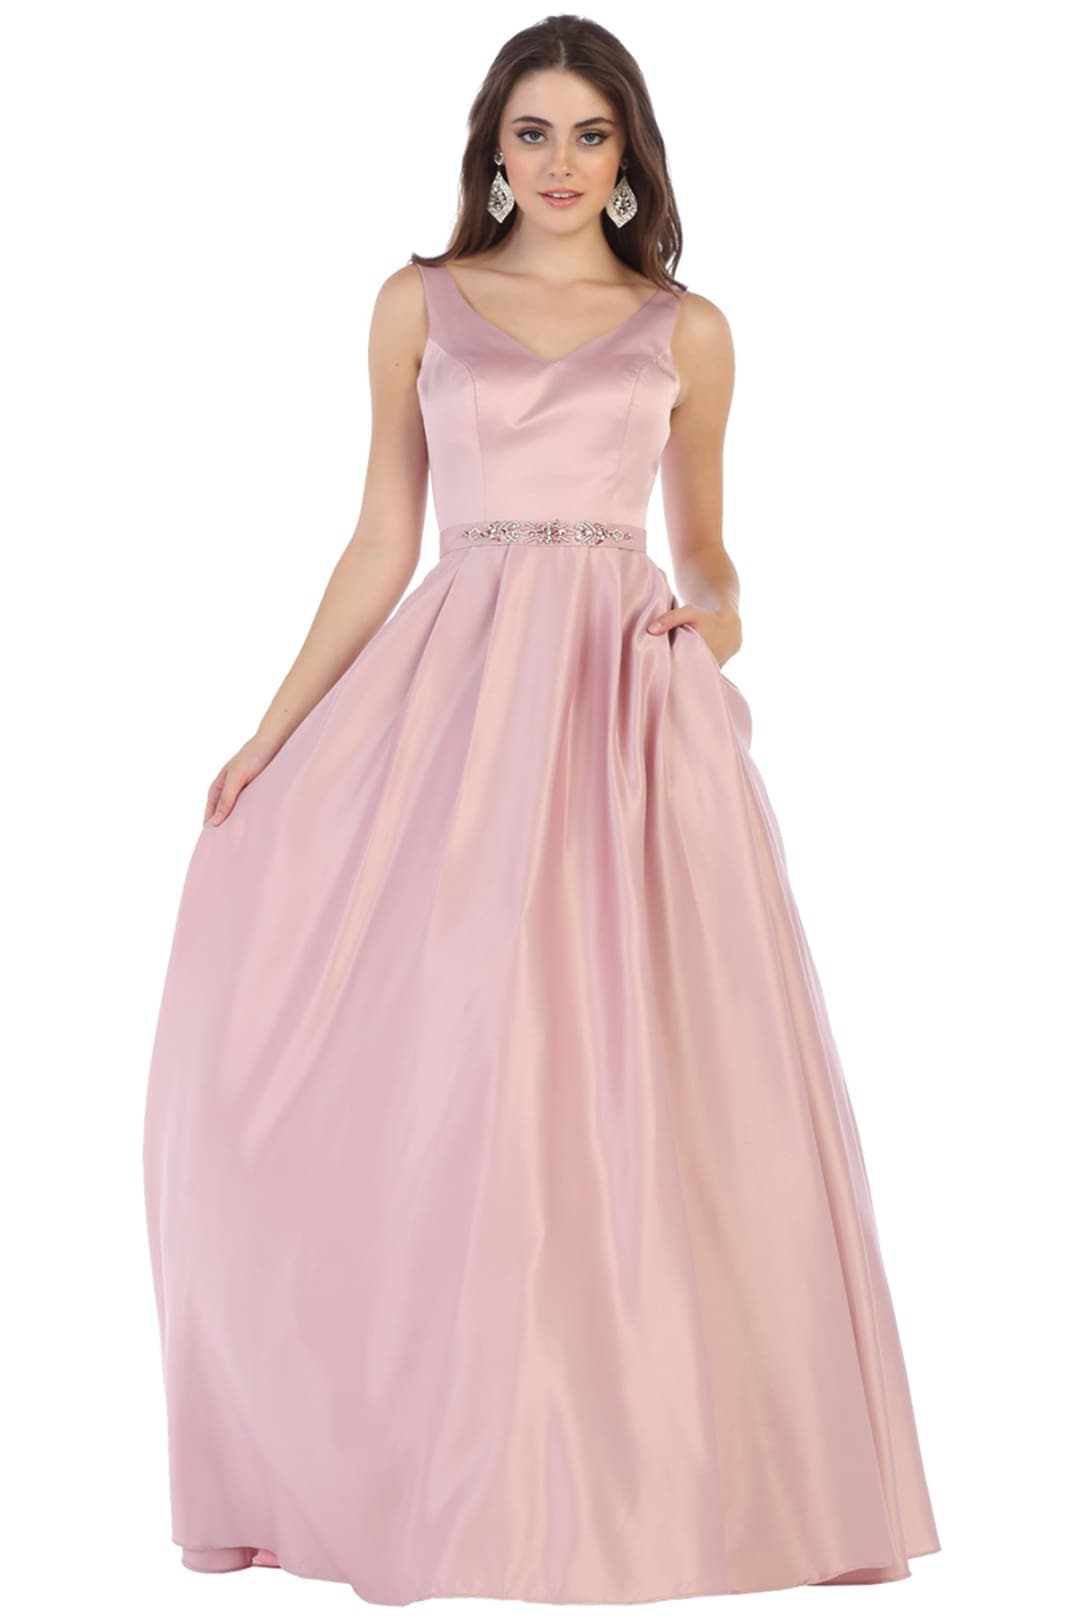 A-line Formal Evening Gown - MAUVE / 10 - Dress